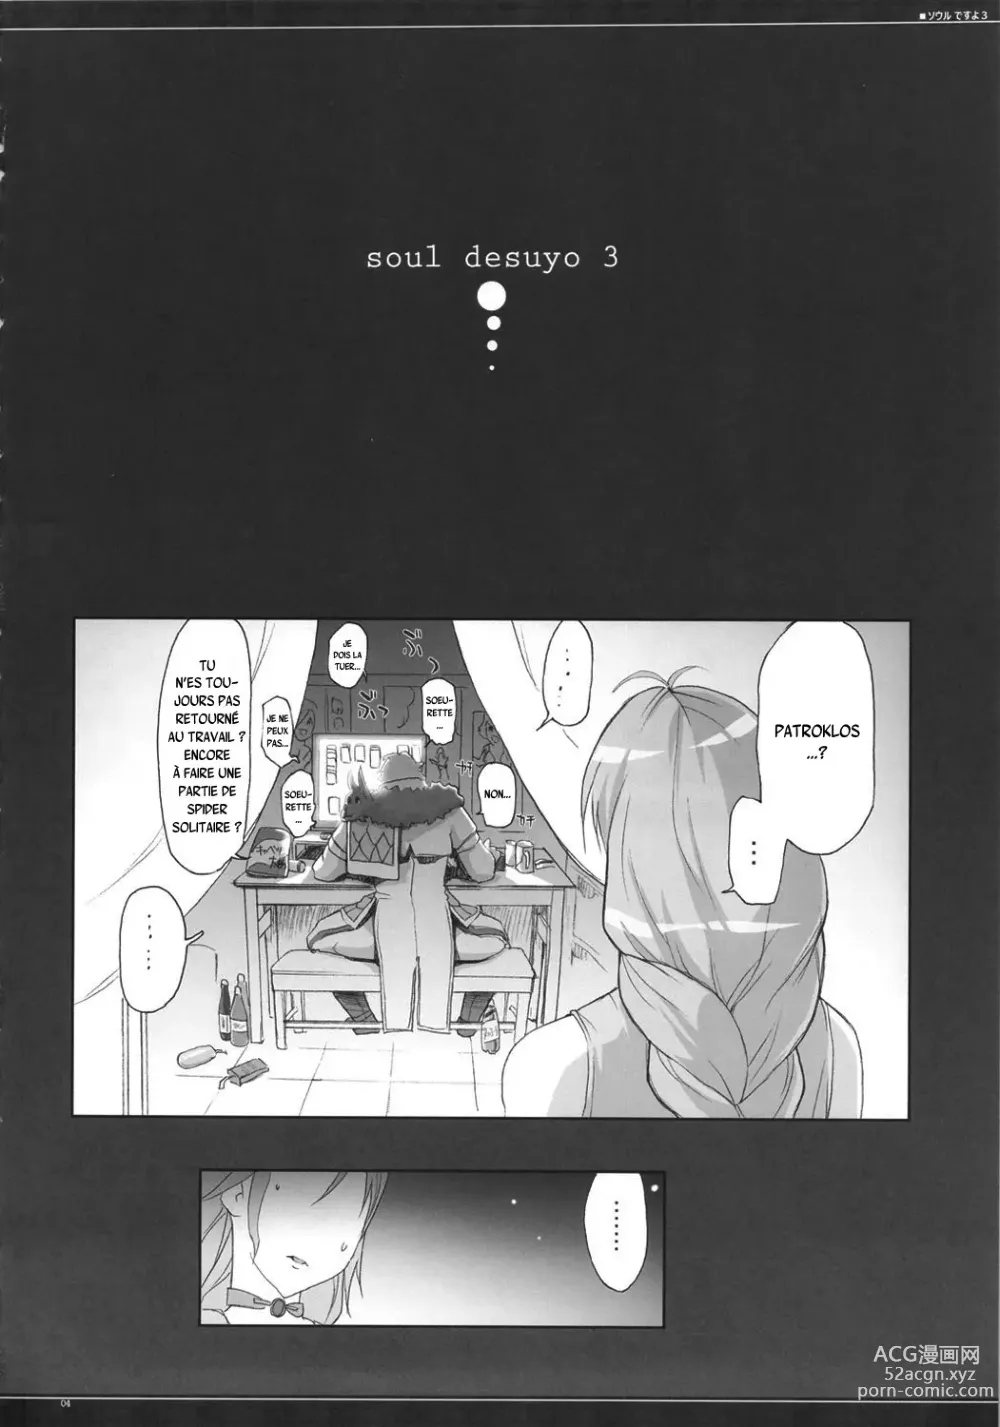 Page 3 of doujinshi Soul desuyo 3